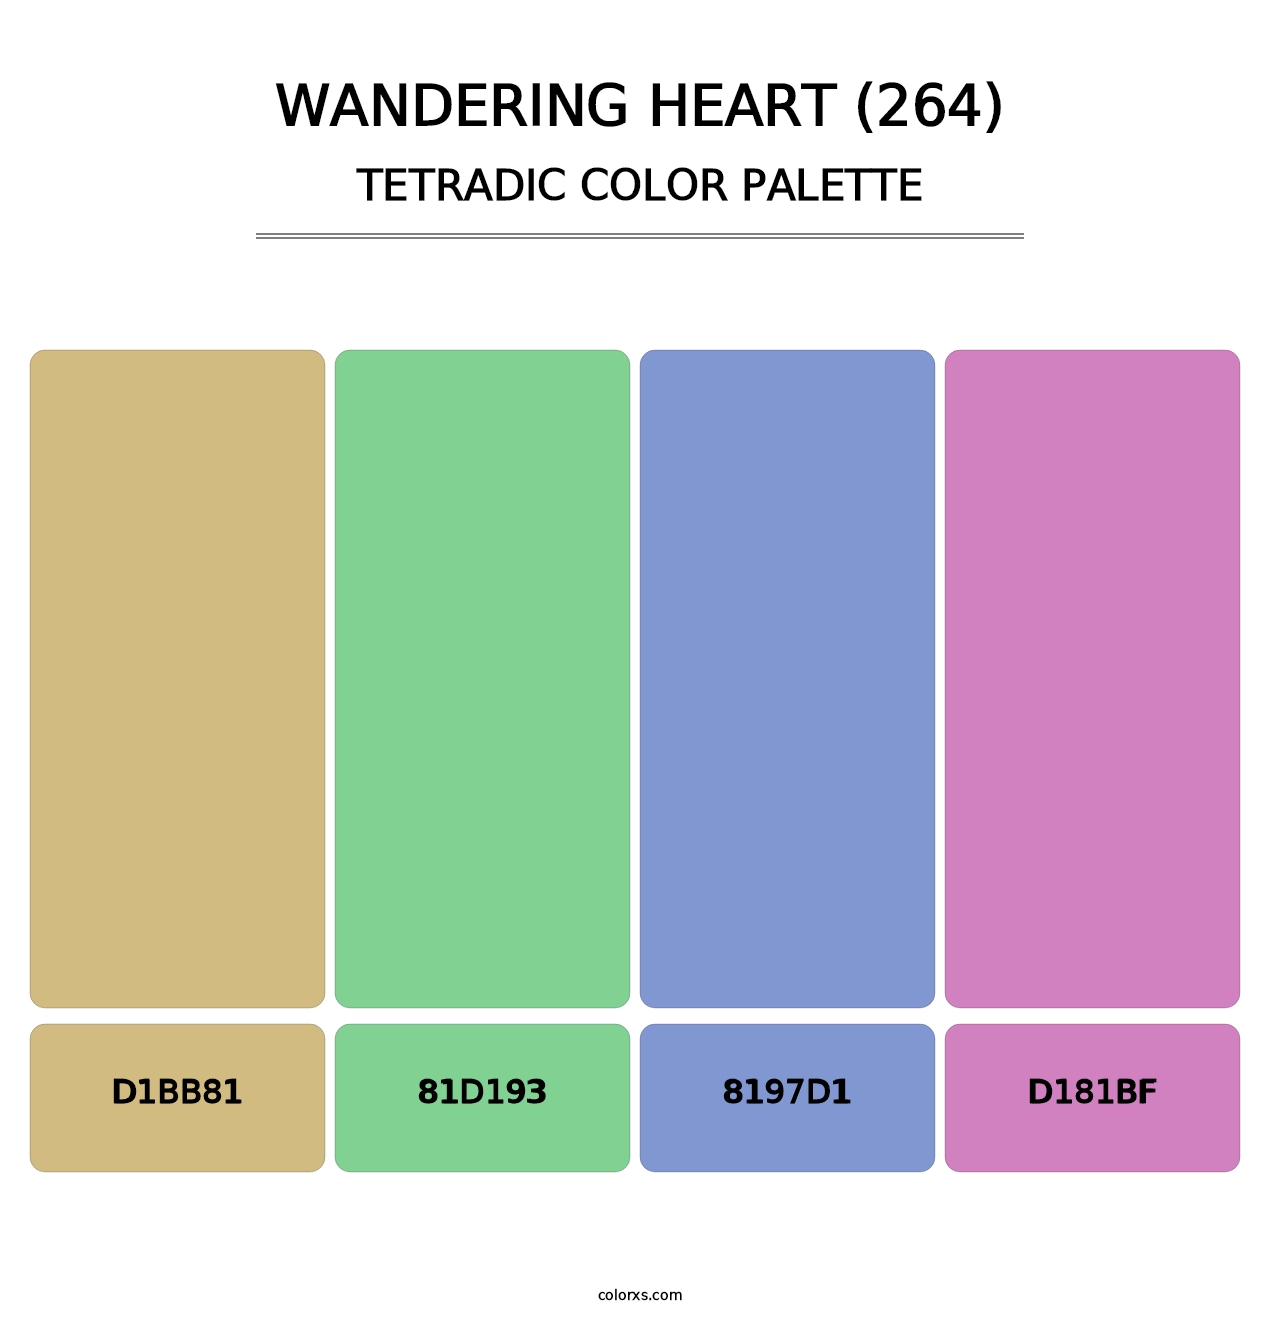 Wandering Heart (264) - Tetradic Color Palette